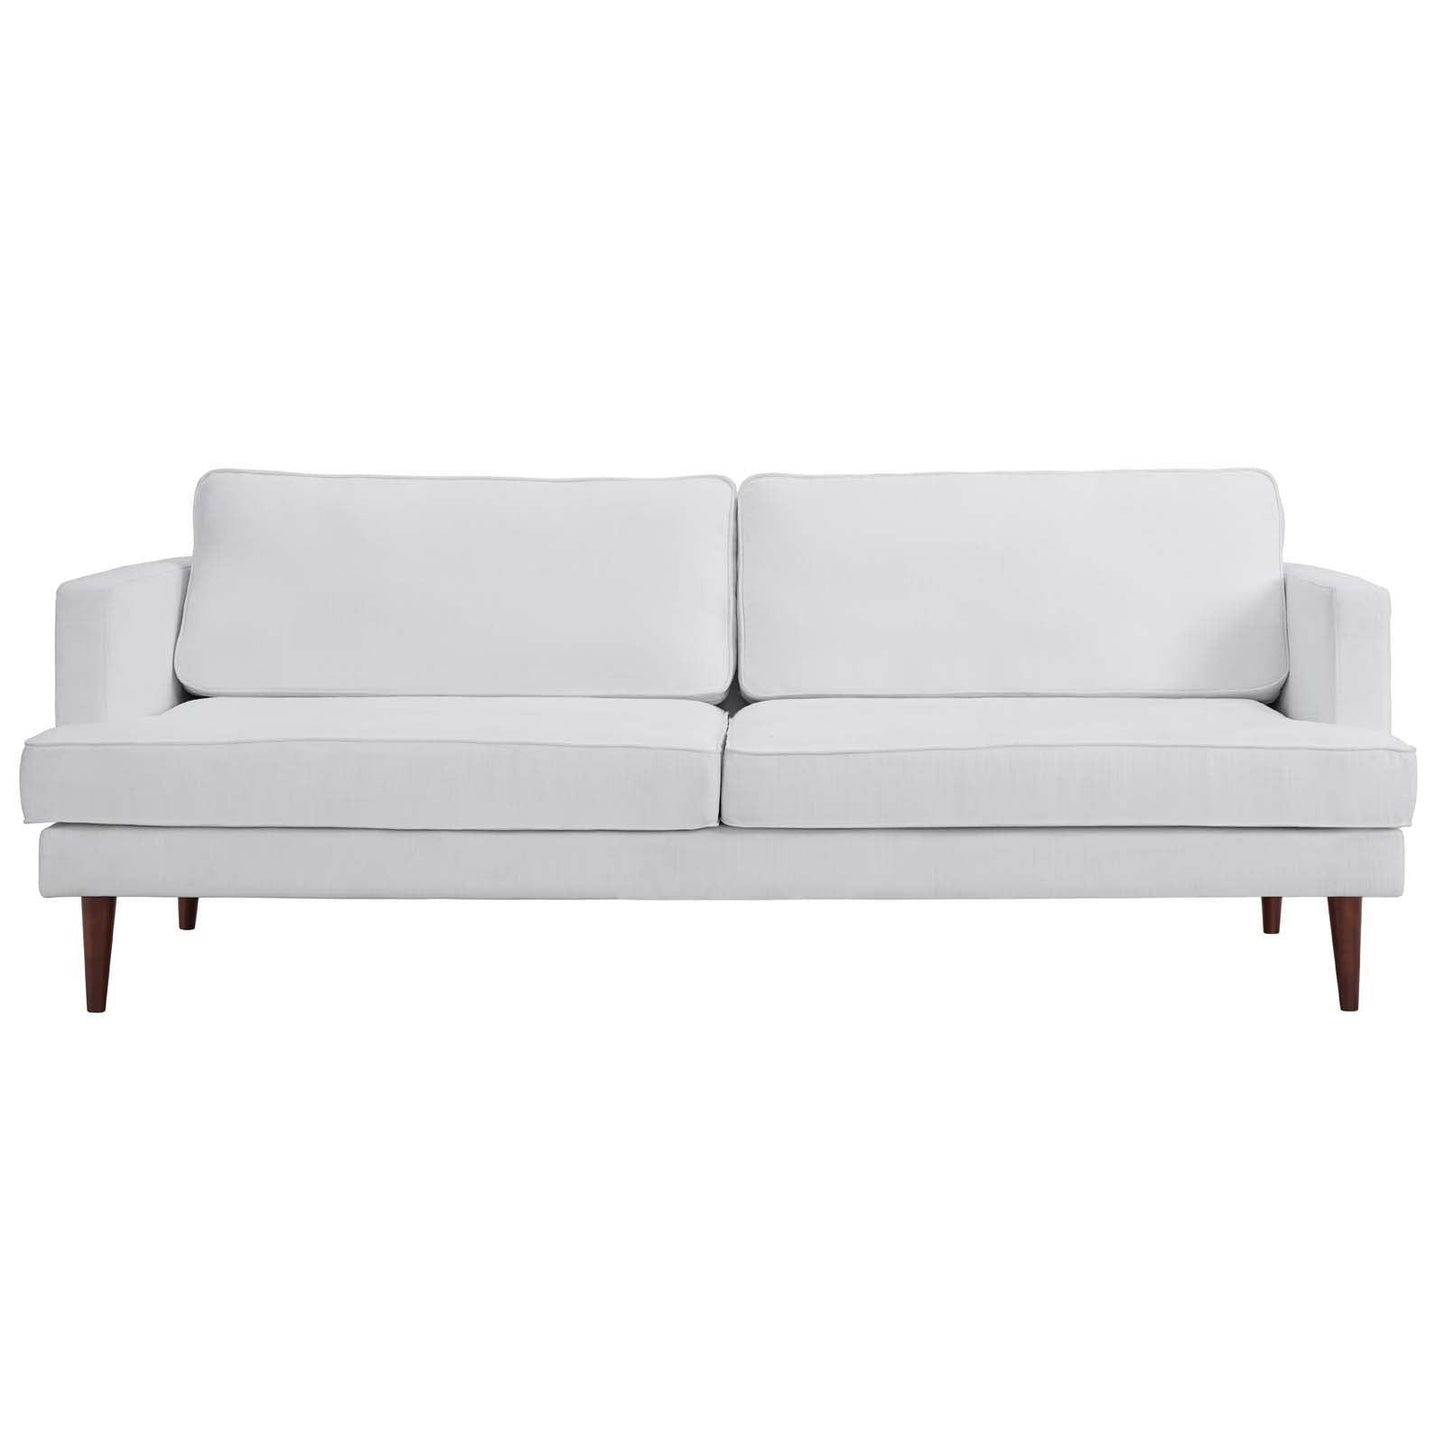 Modway Agile Upholstered Fabric Sofa FredCo